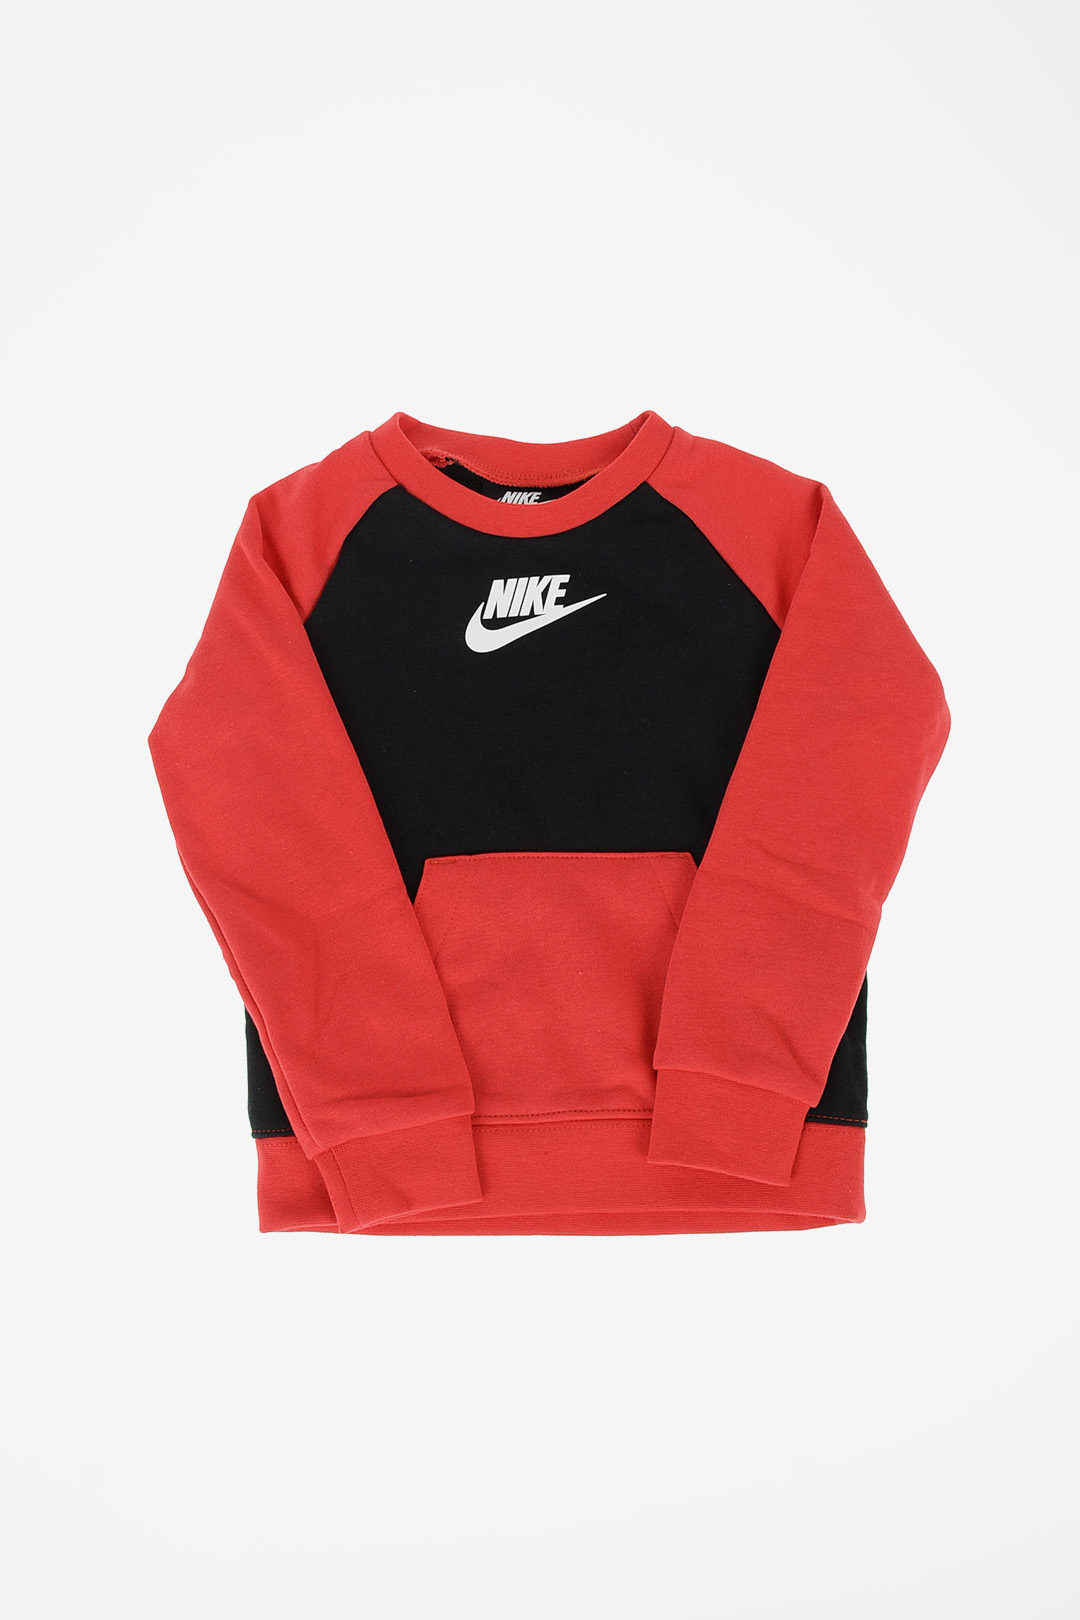 Nike KIDS Printed Crewneck Sweatshirt 